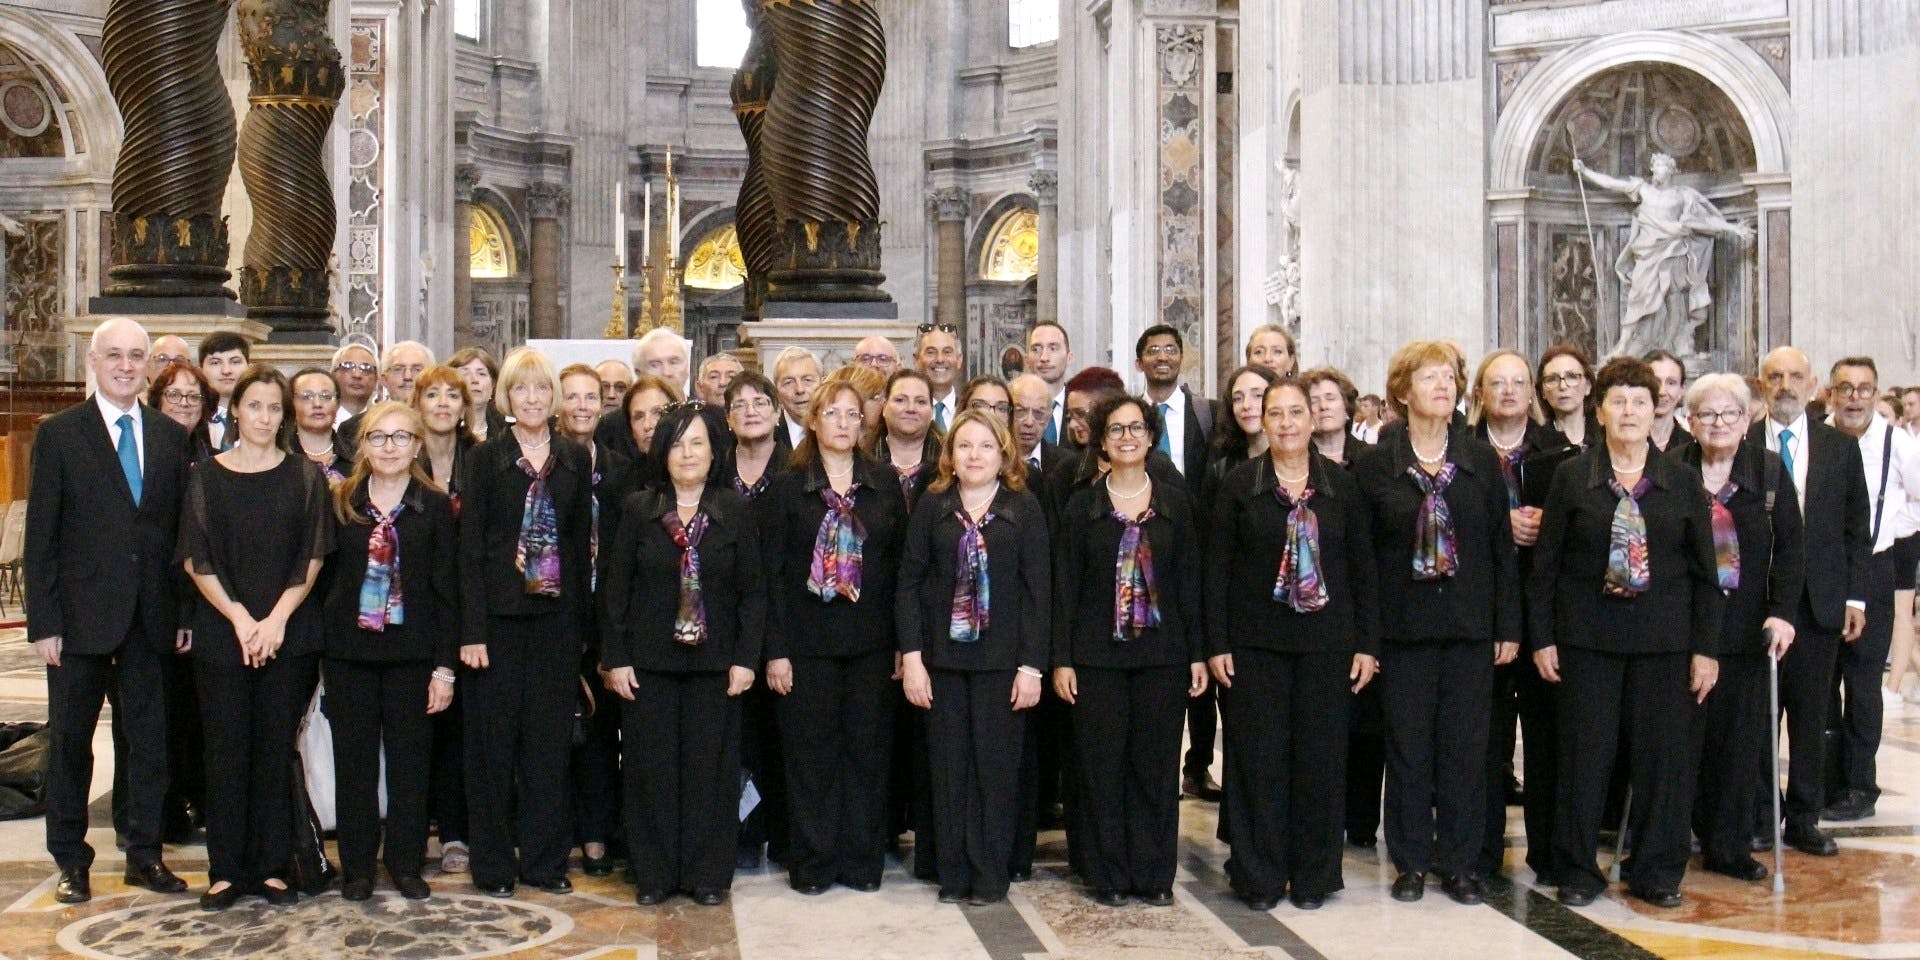 St Paul Choral Society